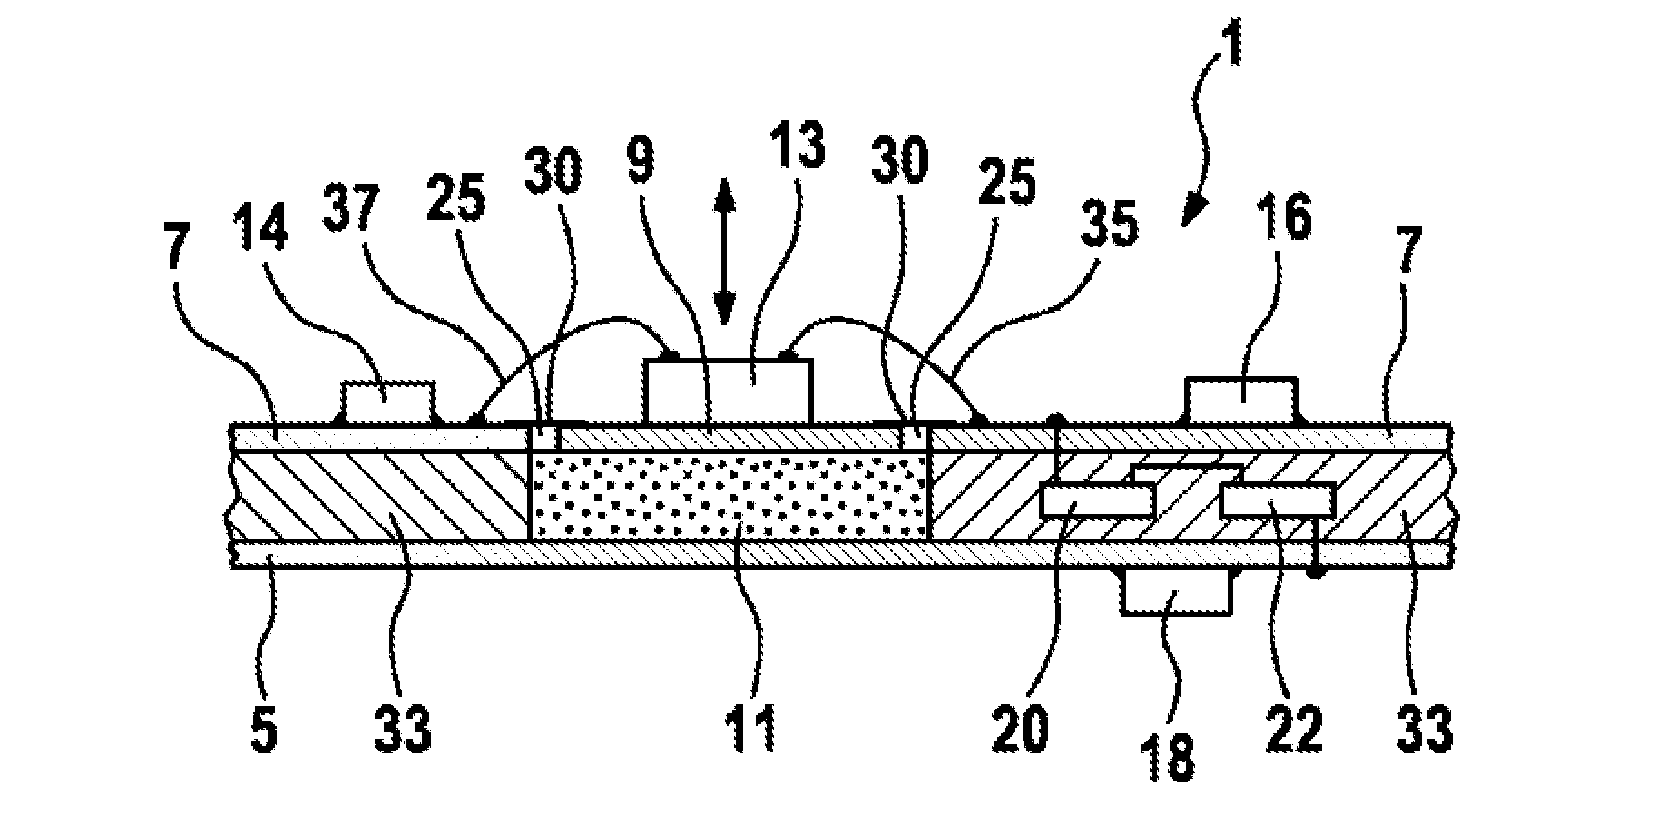 Printed circuit board arrangement comprising an oscillatory system